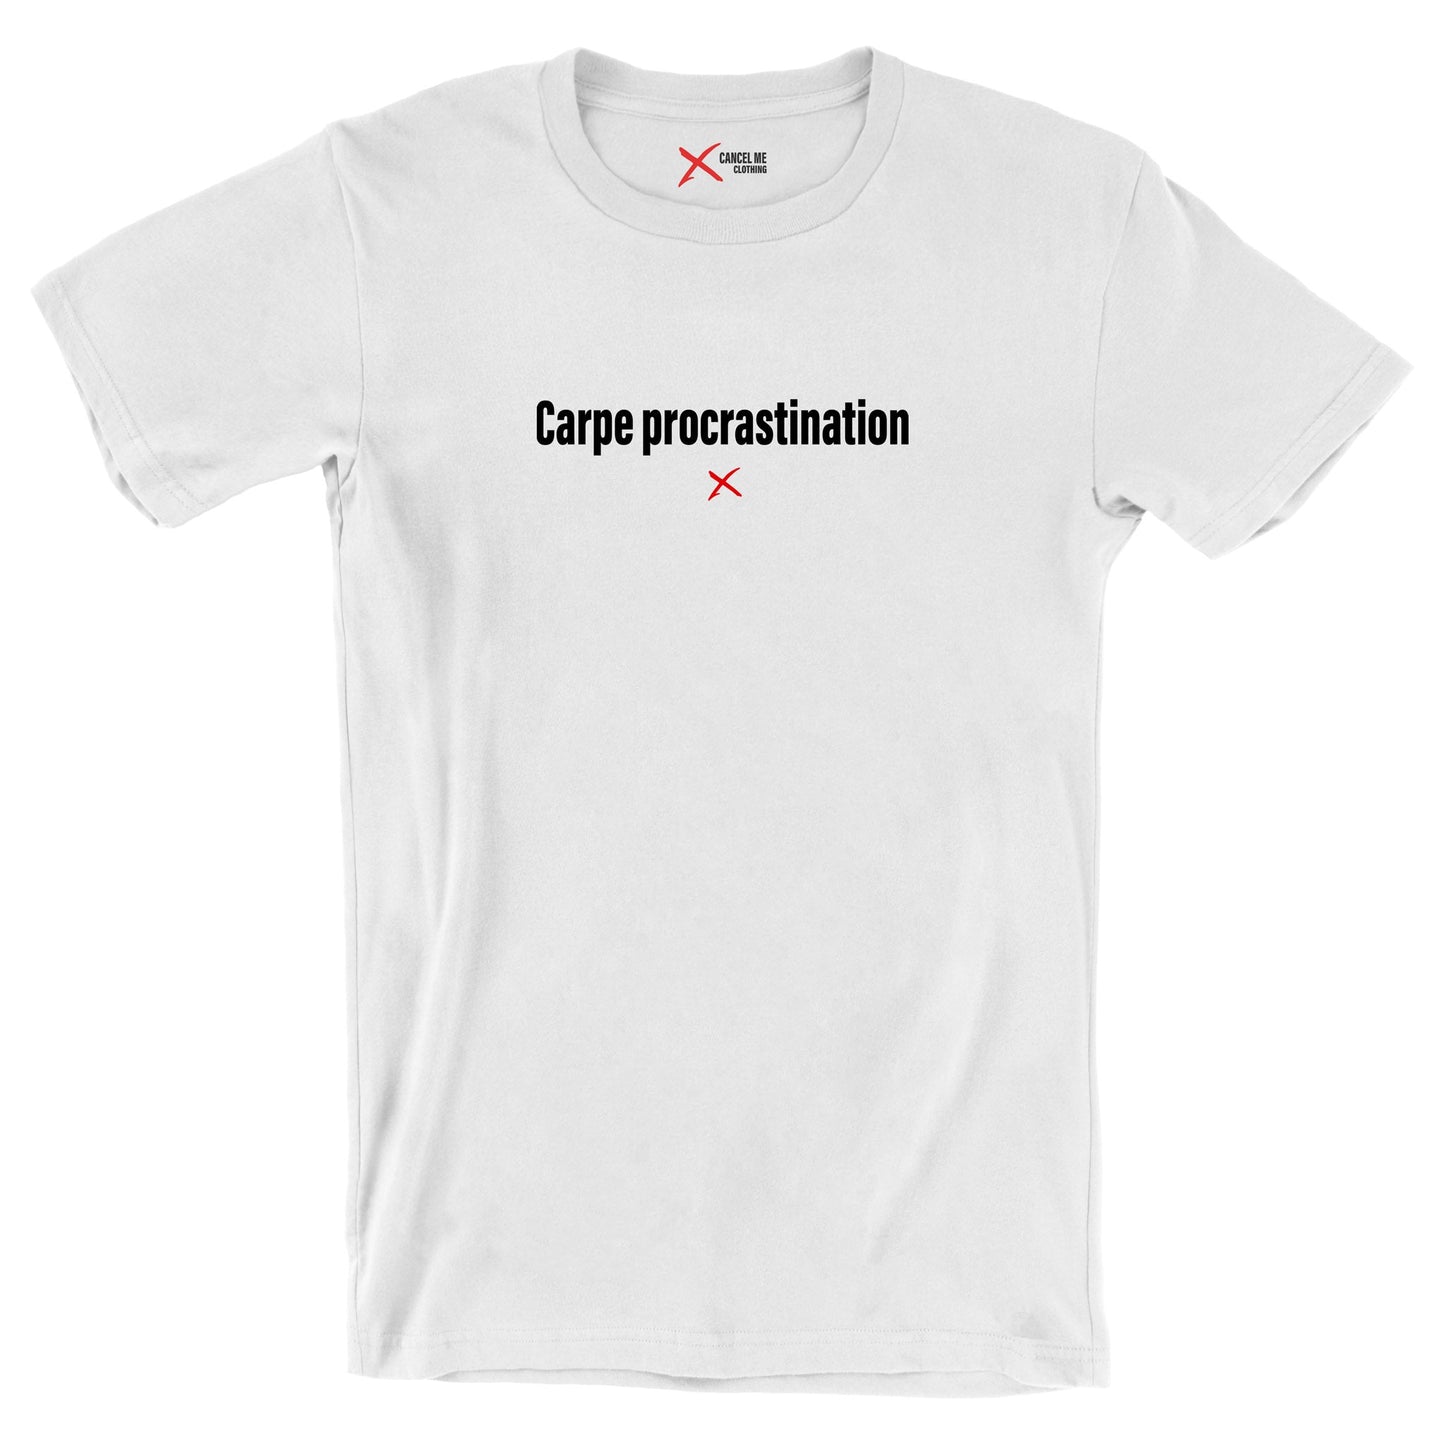 Carpe procrastination - Shirt